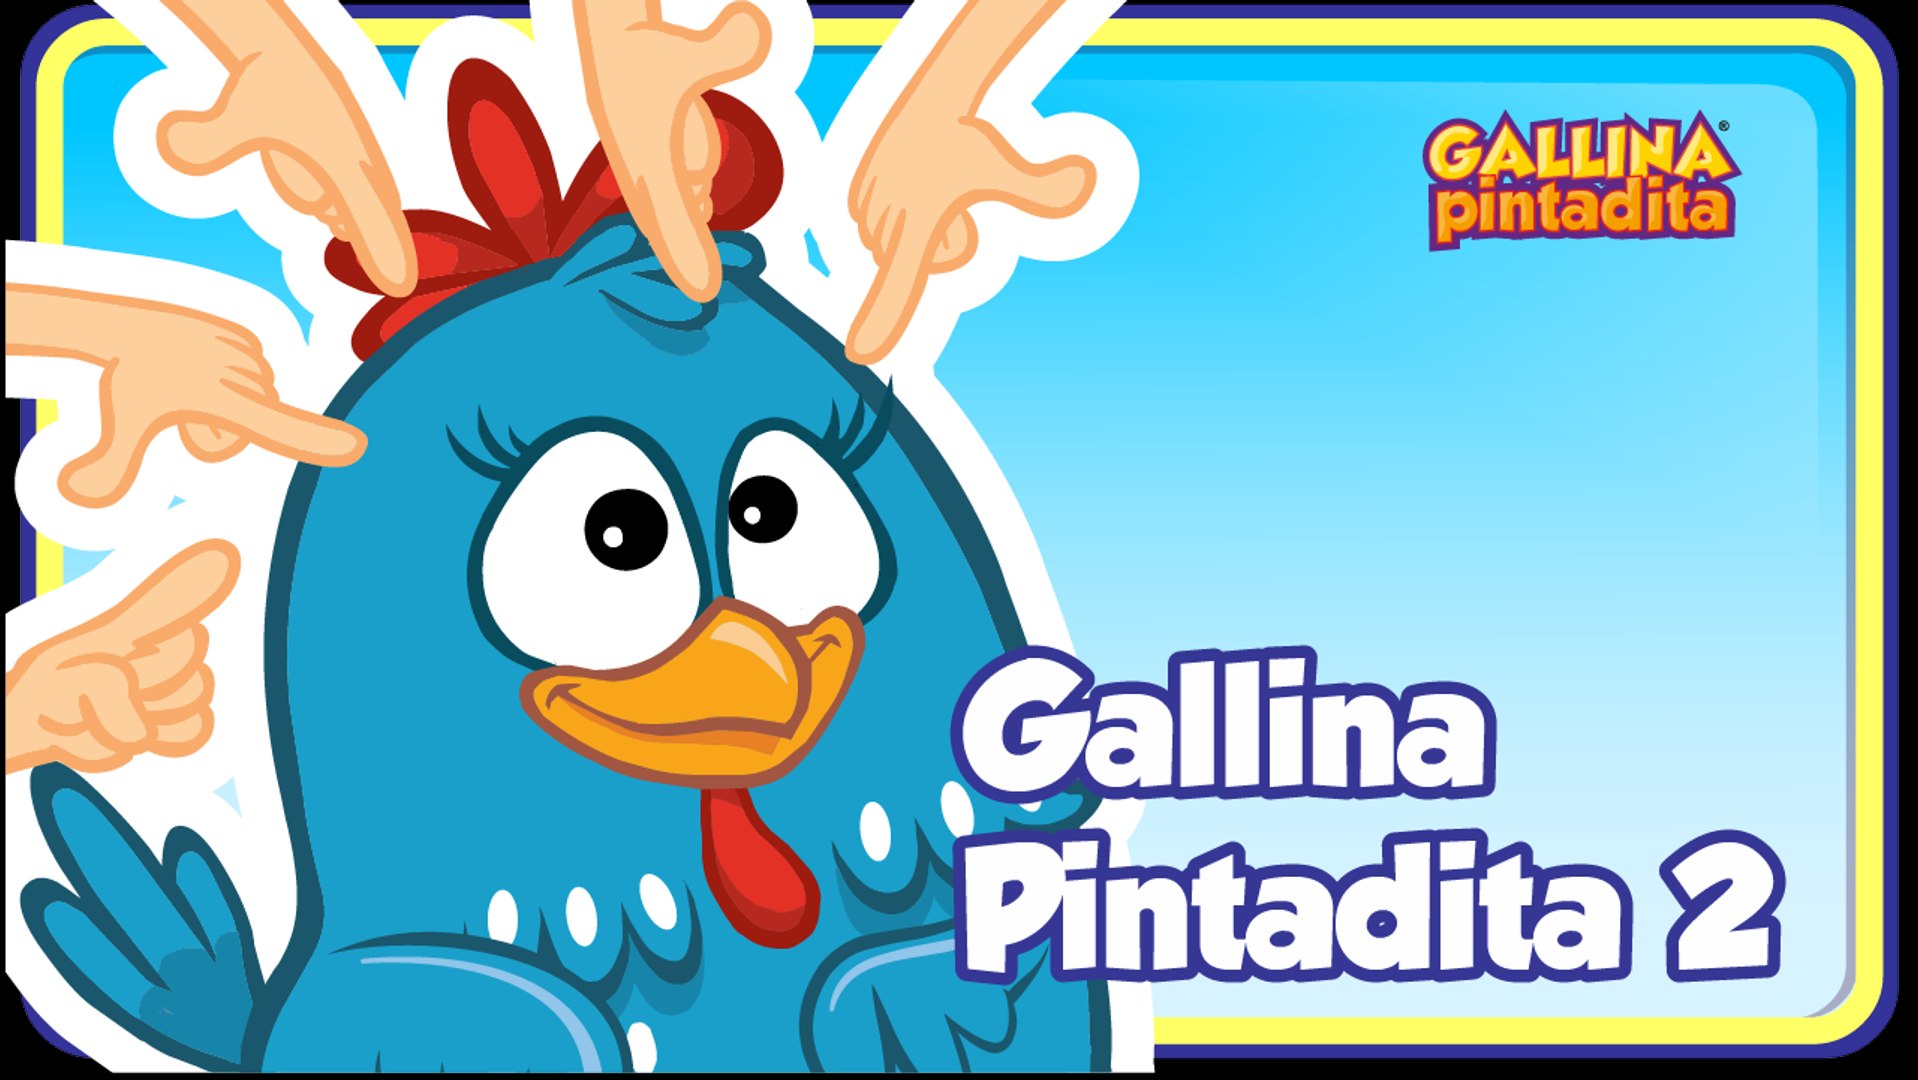 GALLINA PINTADITA 2 - Gallina Pintadita 2 - OFICIAL - Lottie Dottie Chicken  en Español - Vídeo Dailymotion